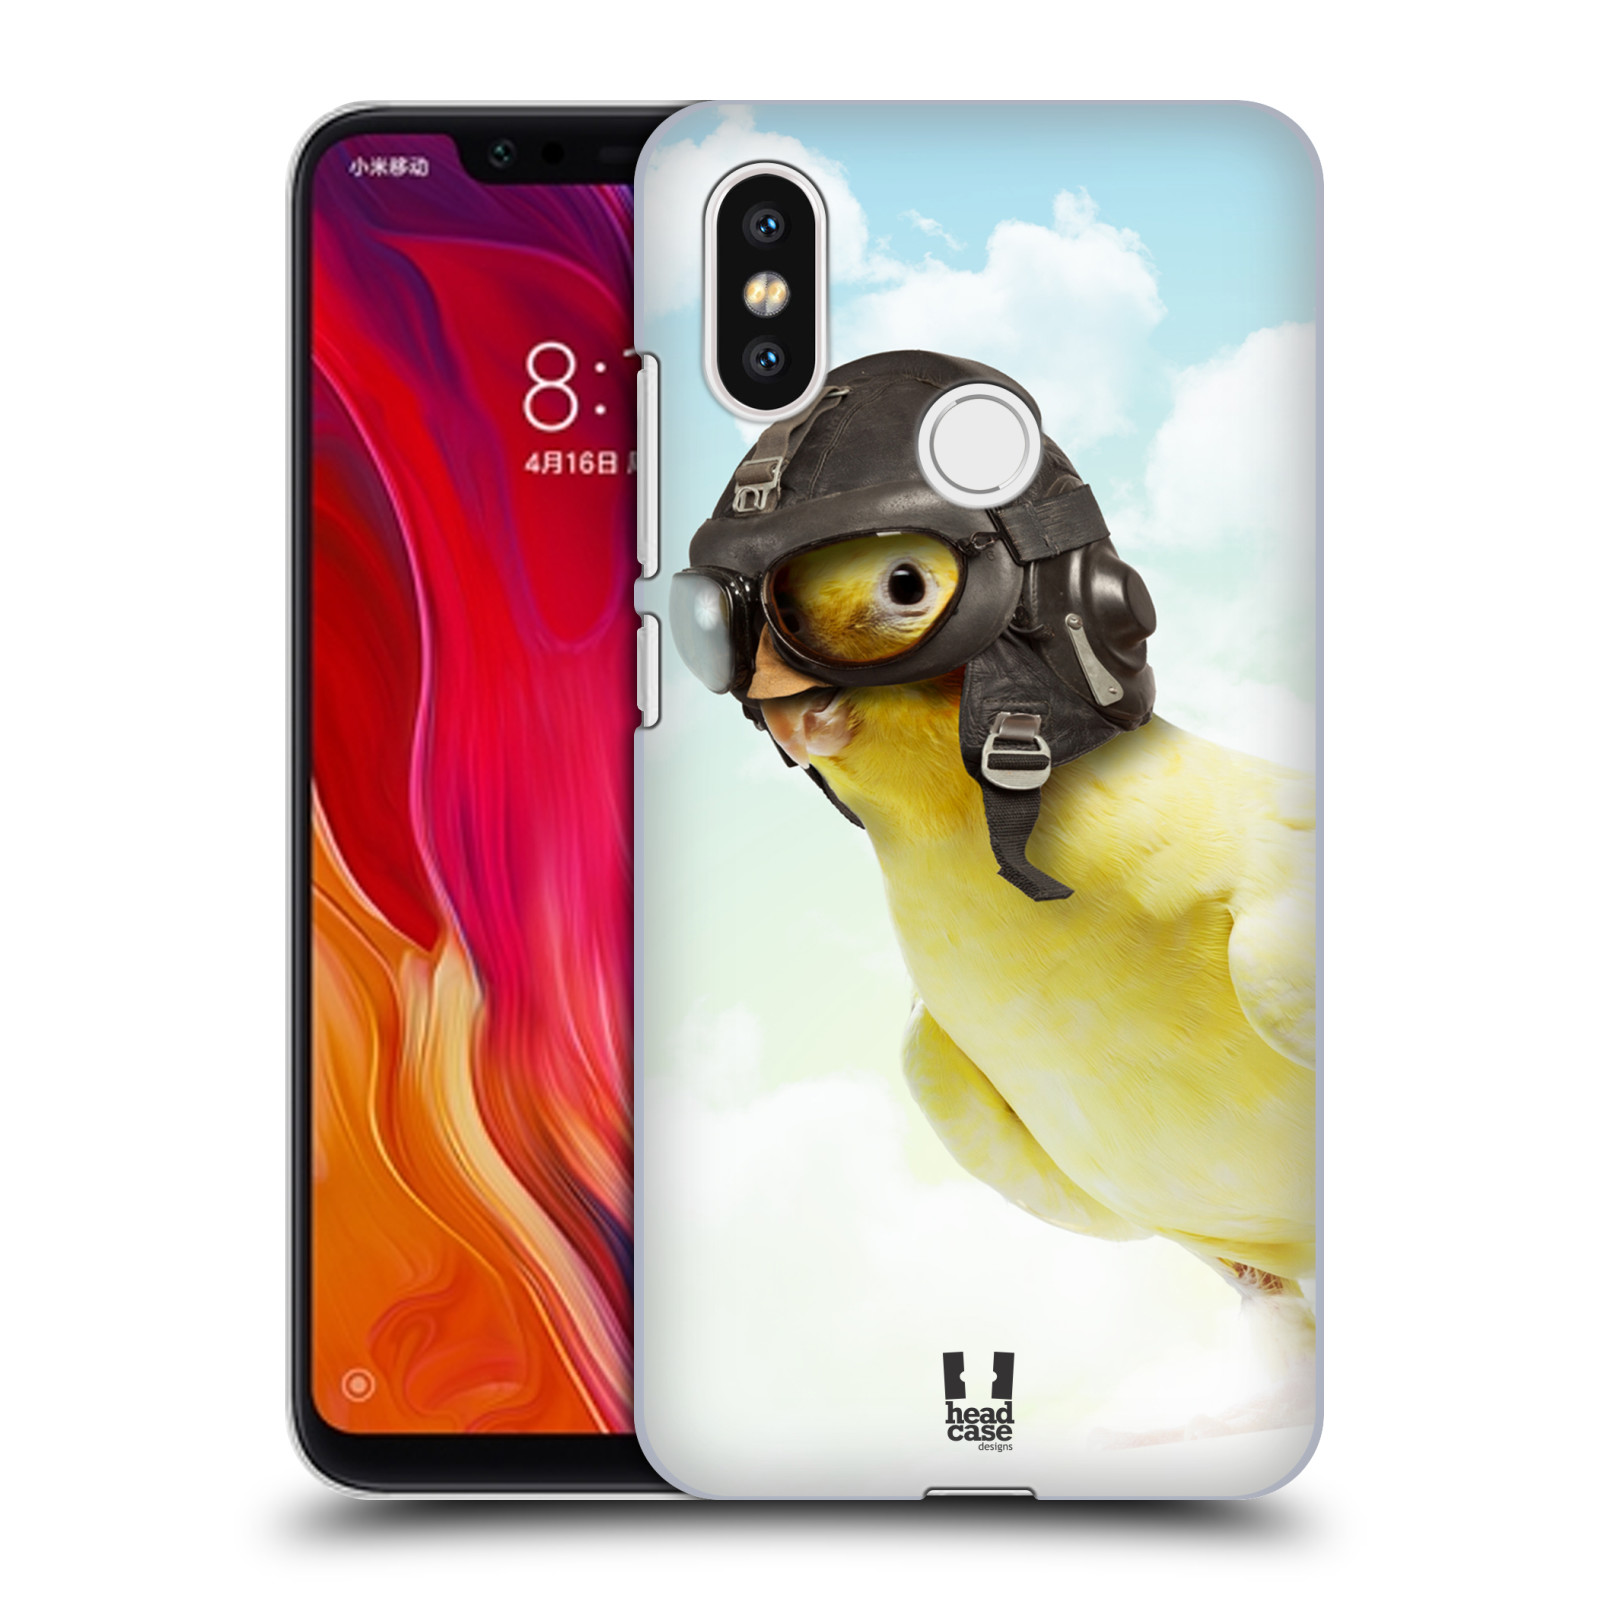 HEAD CASE plastový obal na mobil Xiaomi Mi 8 vzor Legrační zvířátka ptáček letec